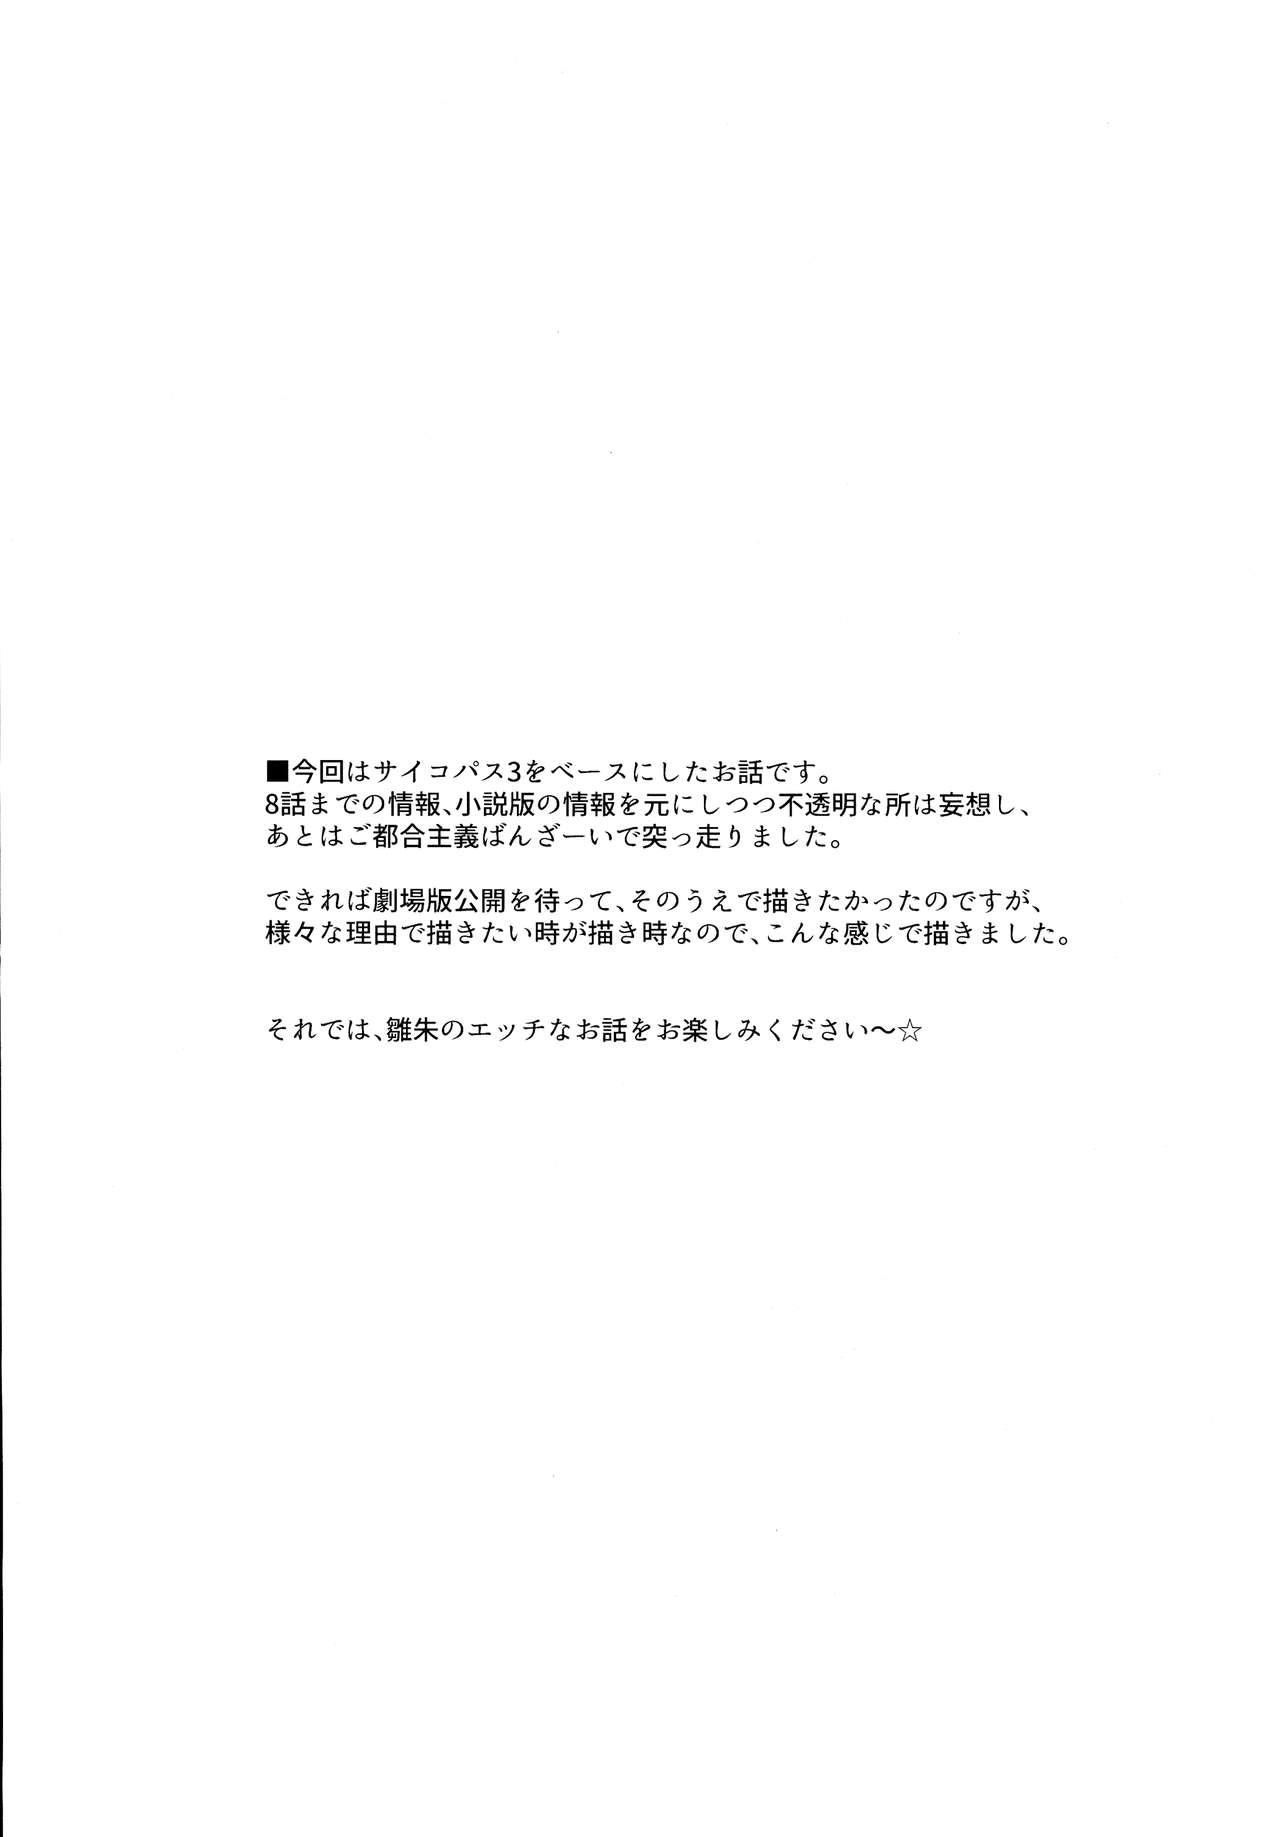 Twinkstudios Furete, Yuruyaka ni, Tokeatta - Psycho-pass Ngentot - Page 4